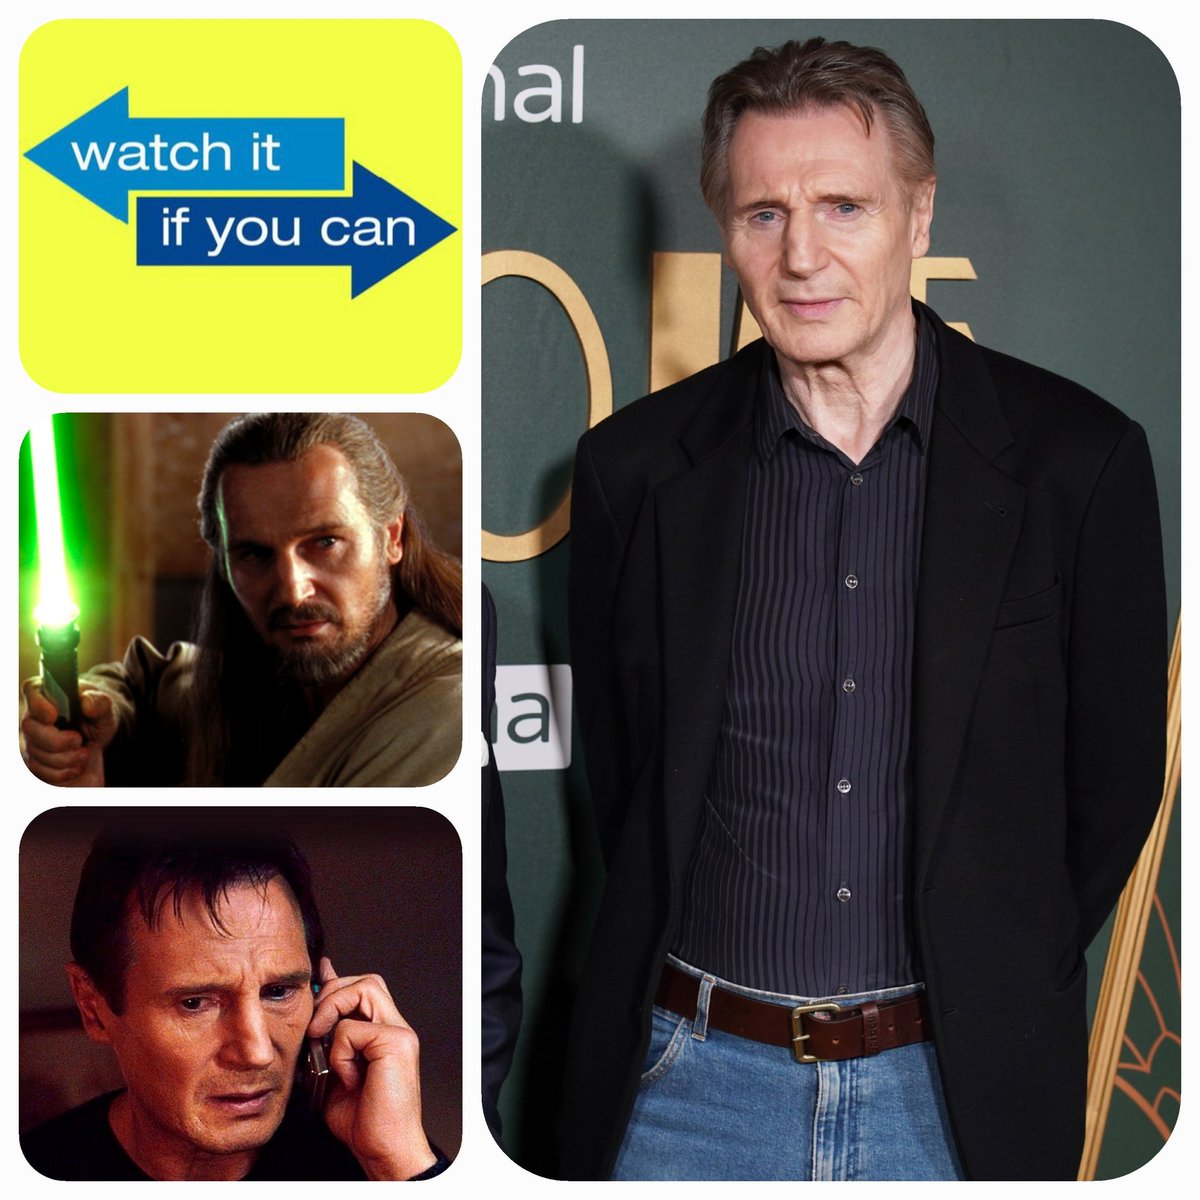 📢 'Shout Out' - Happy Birthday to Liam Neeson! 🎁

#LiamNeeson #birthday #today #Taken #Batman #starwars #QuiGonJinn #bryanmills